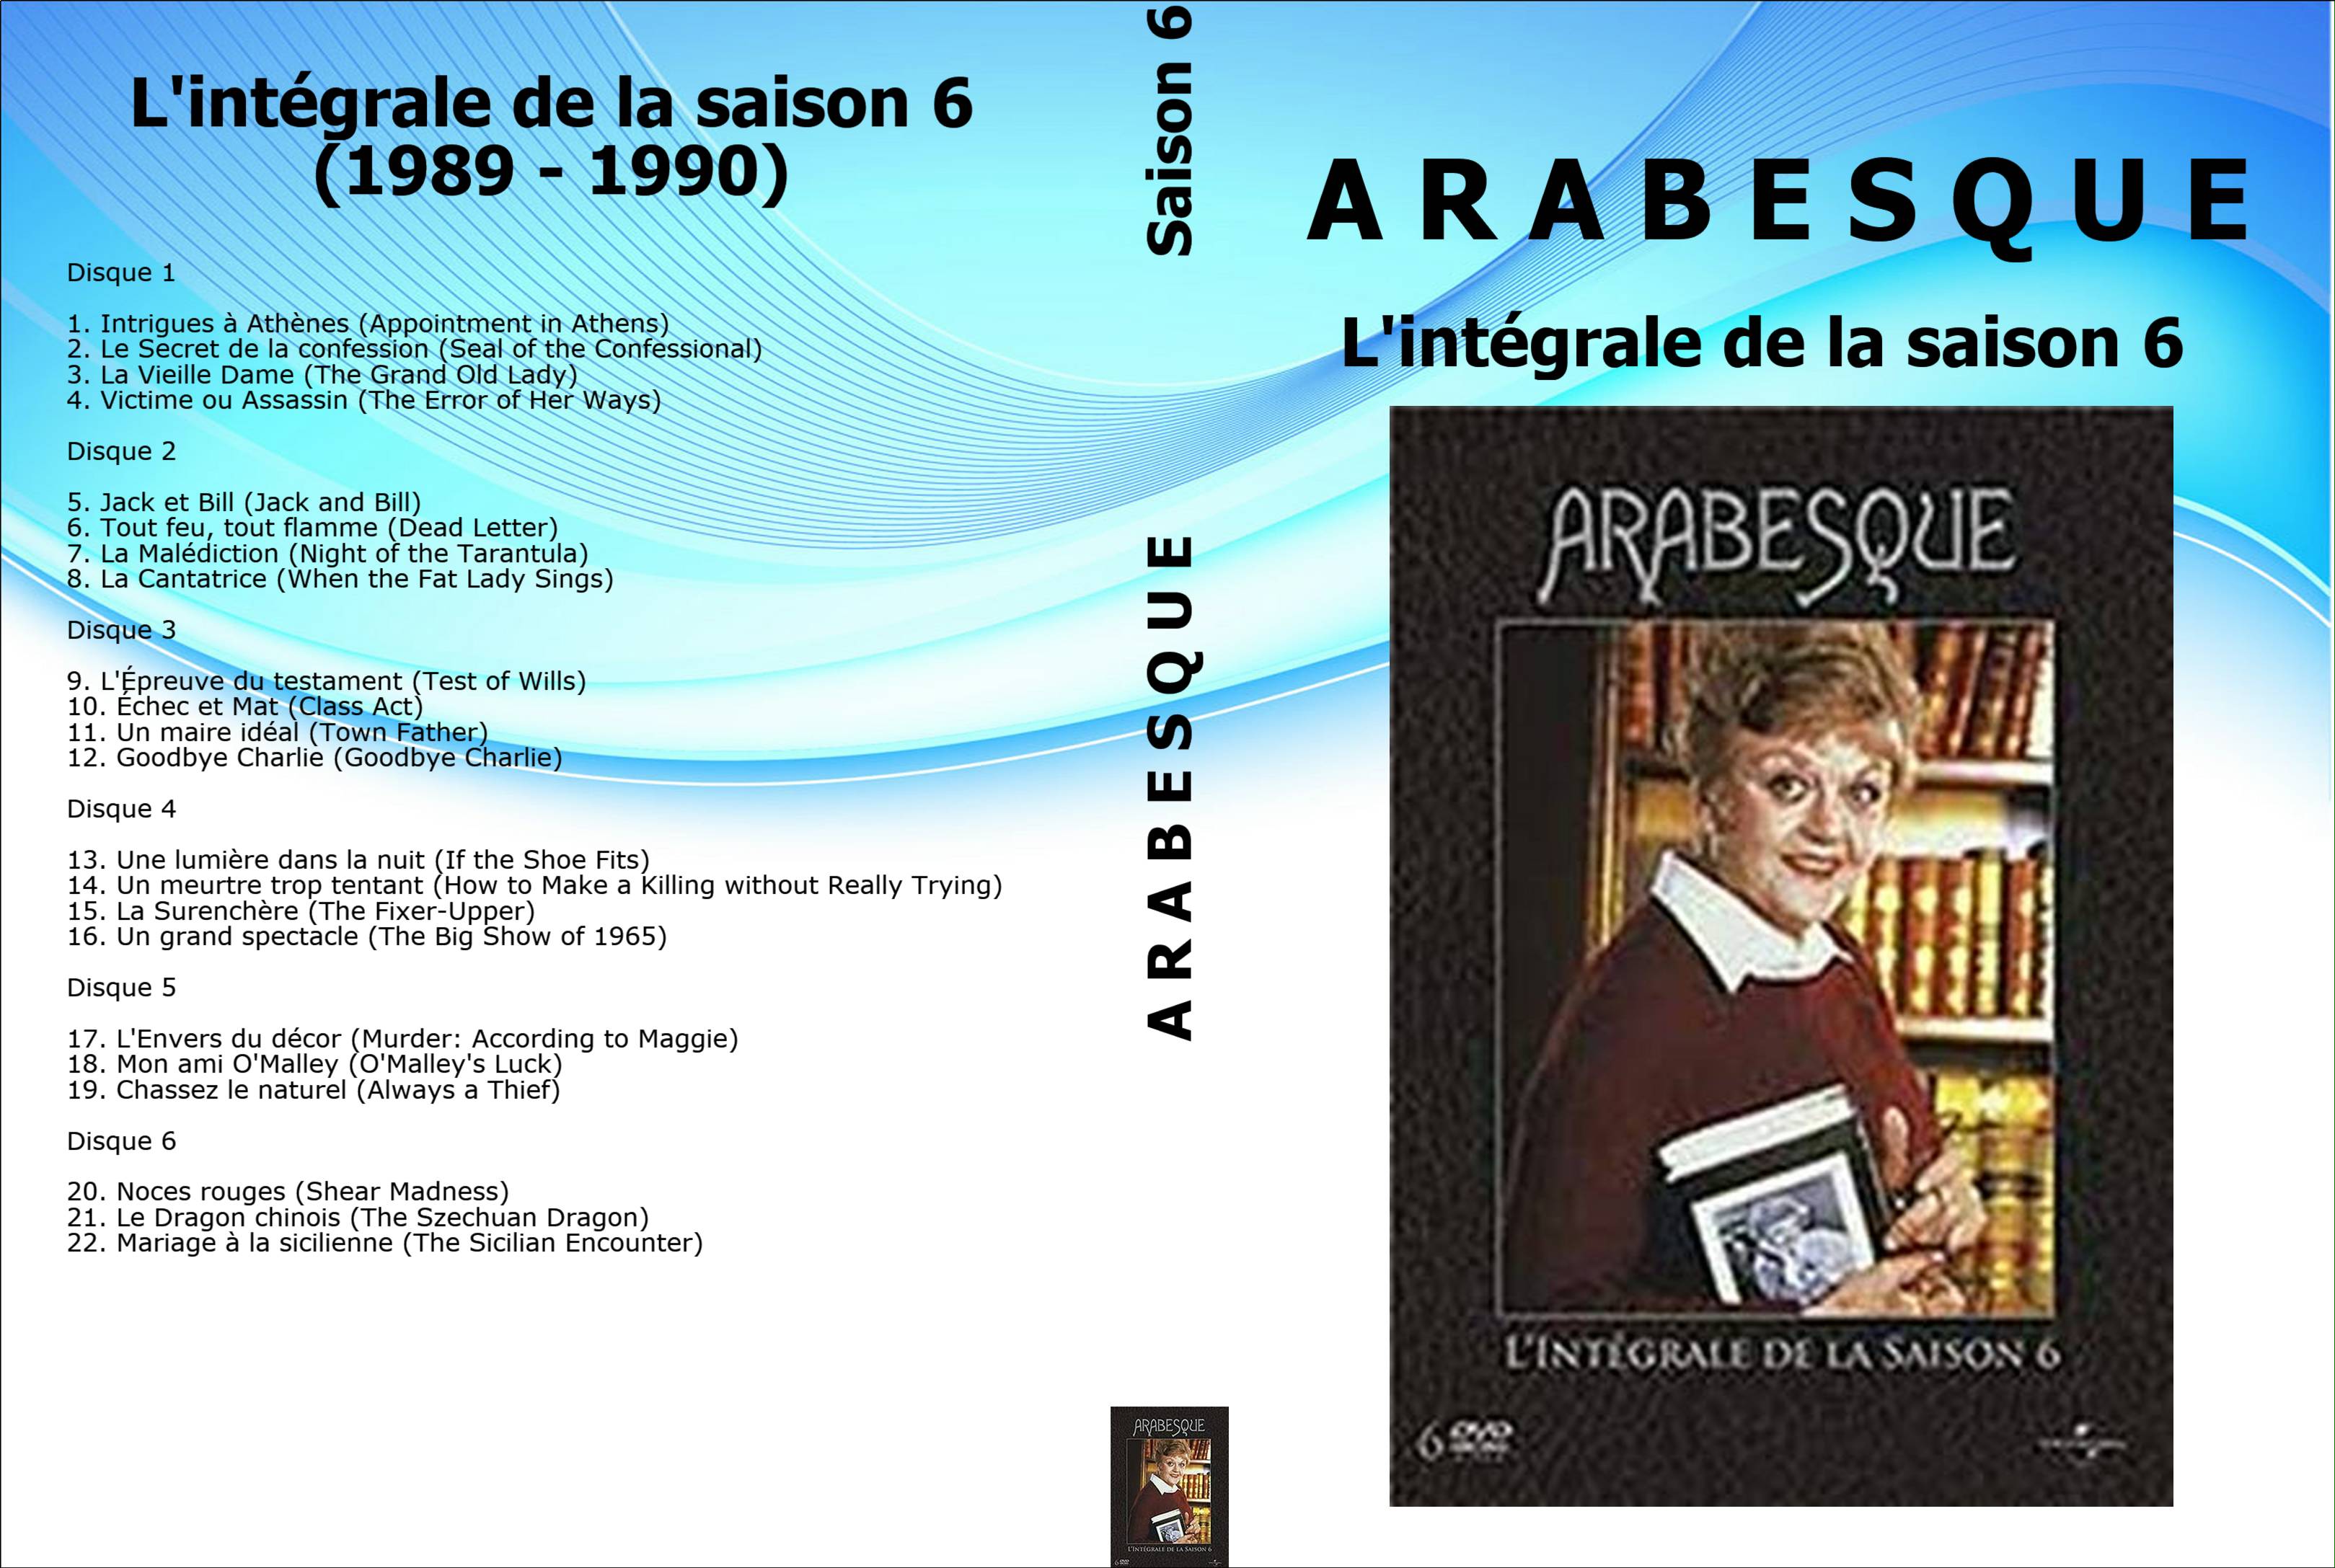 Jaquette DVD Arabesque saison 6 custom